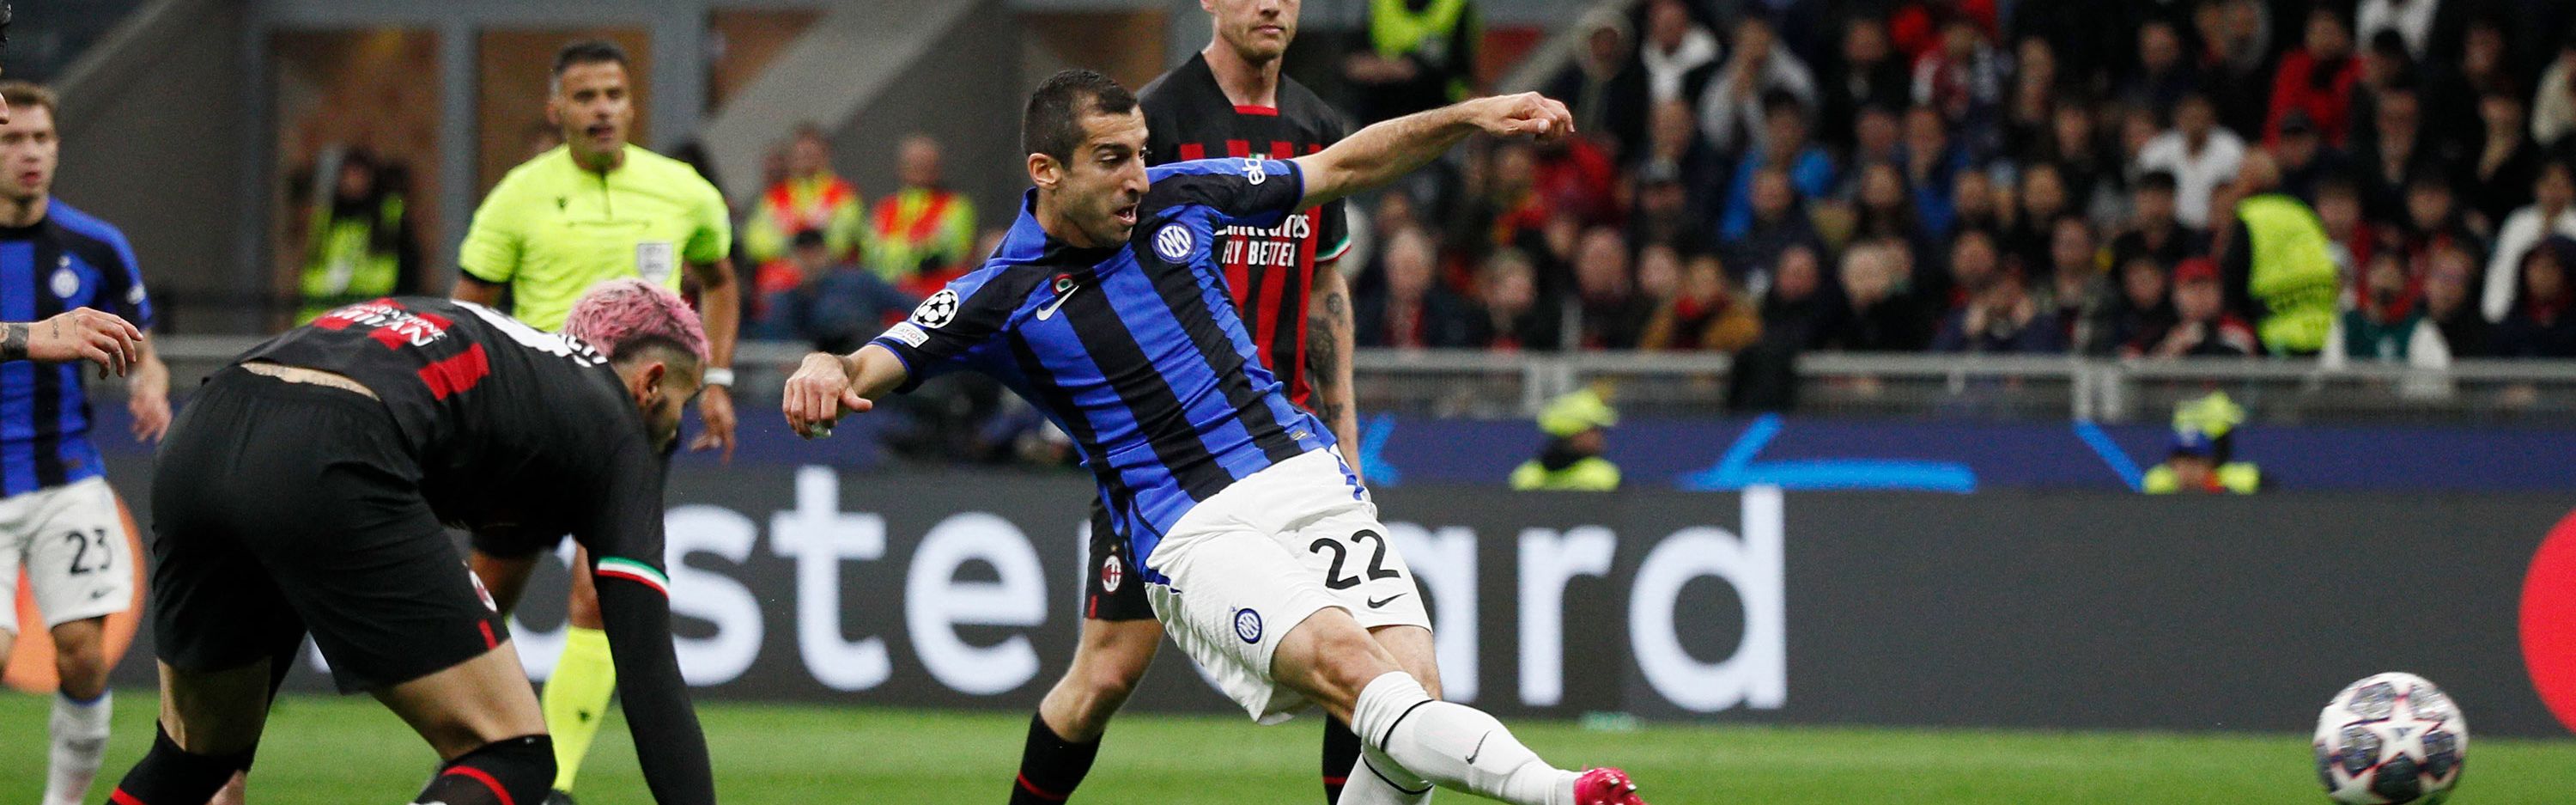 Inter Milan's lightning start stuns AC Milan in Champions League semifinal  | CNN